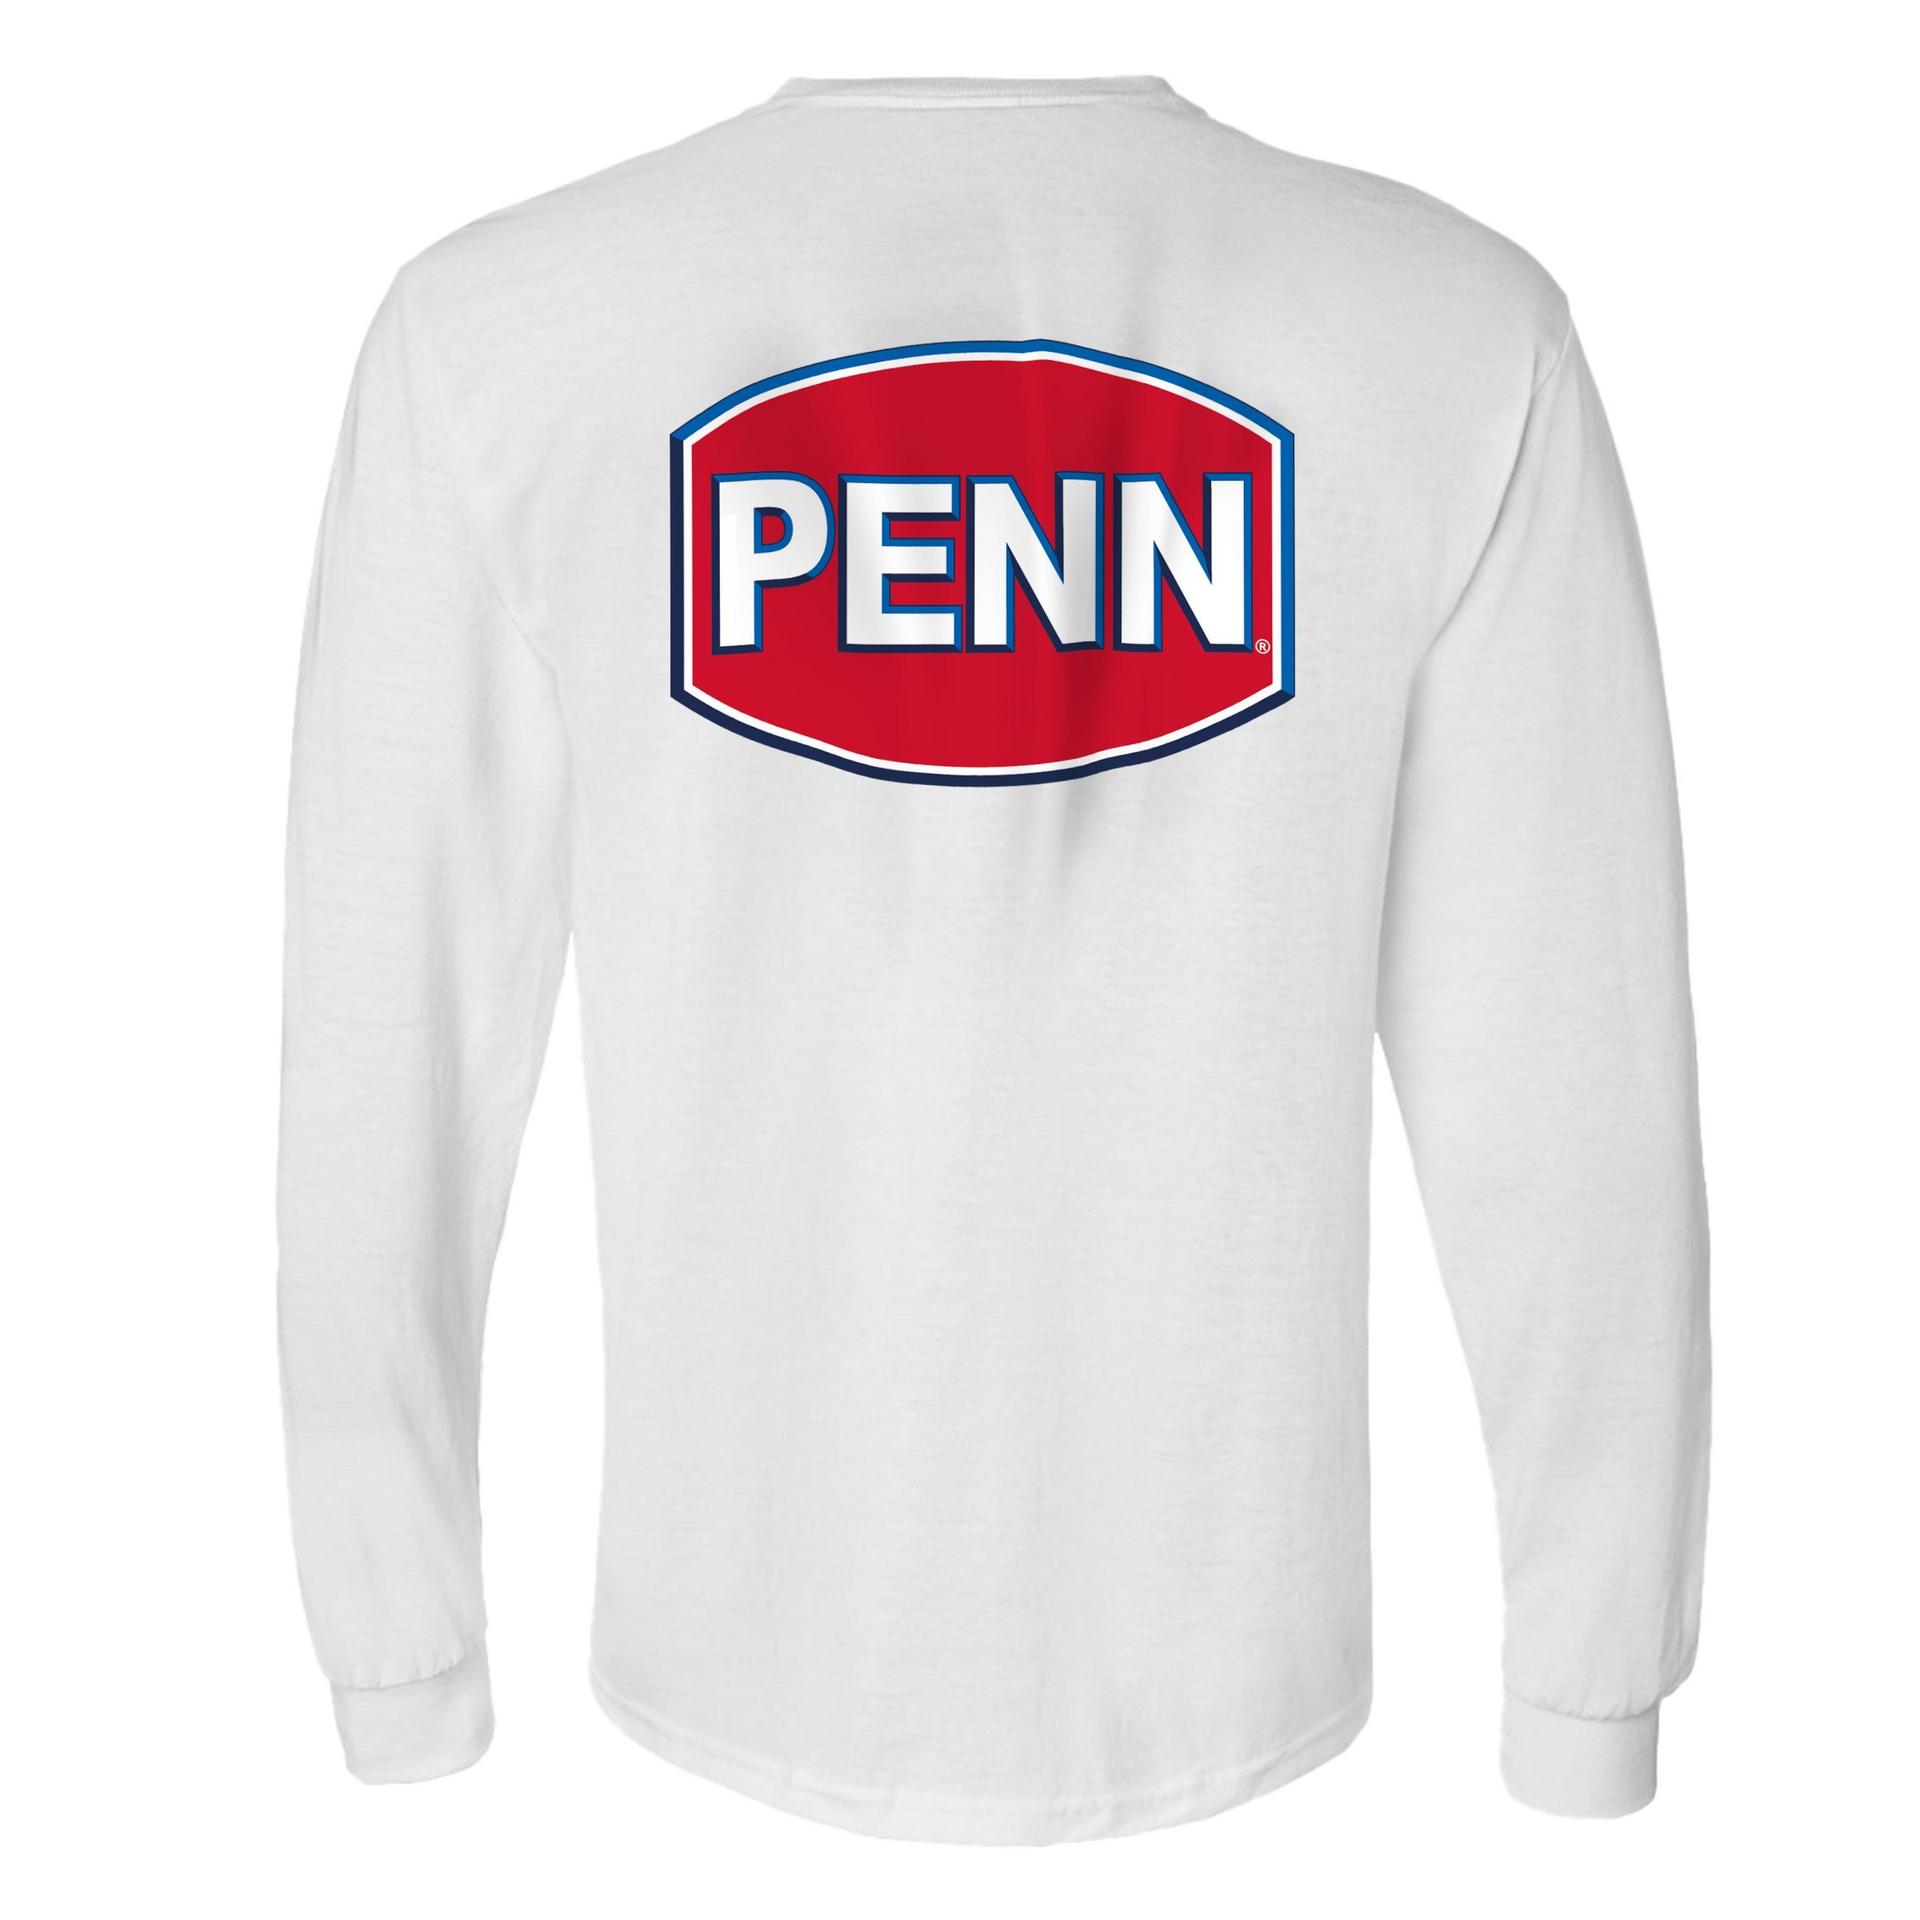 Logo Long Sleeve T-Shirt - White, XXL - Penn Fishing